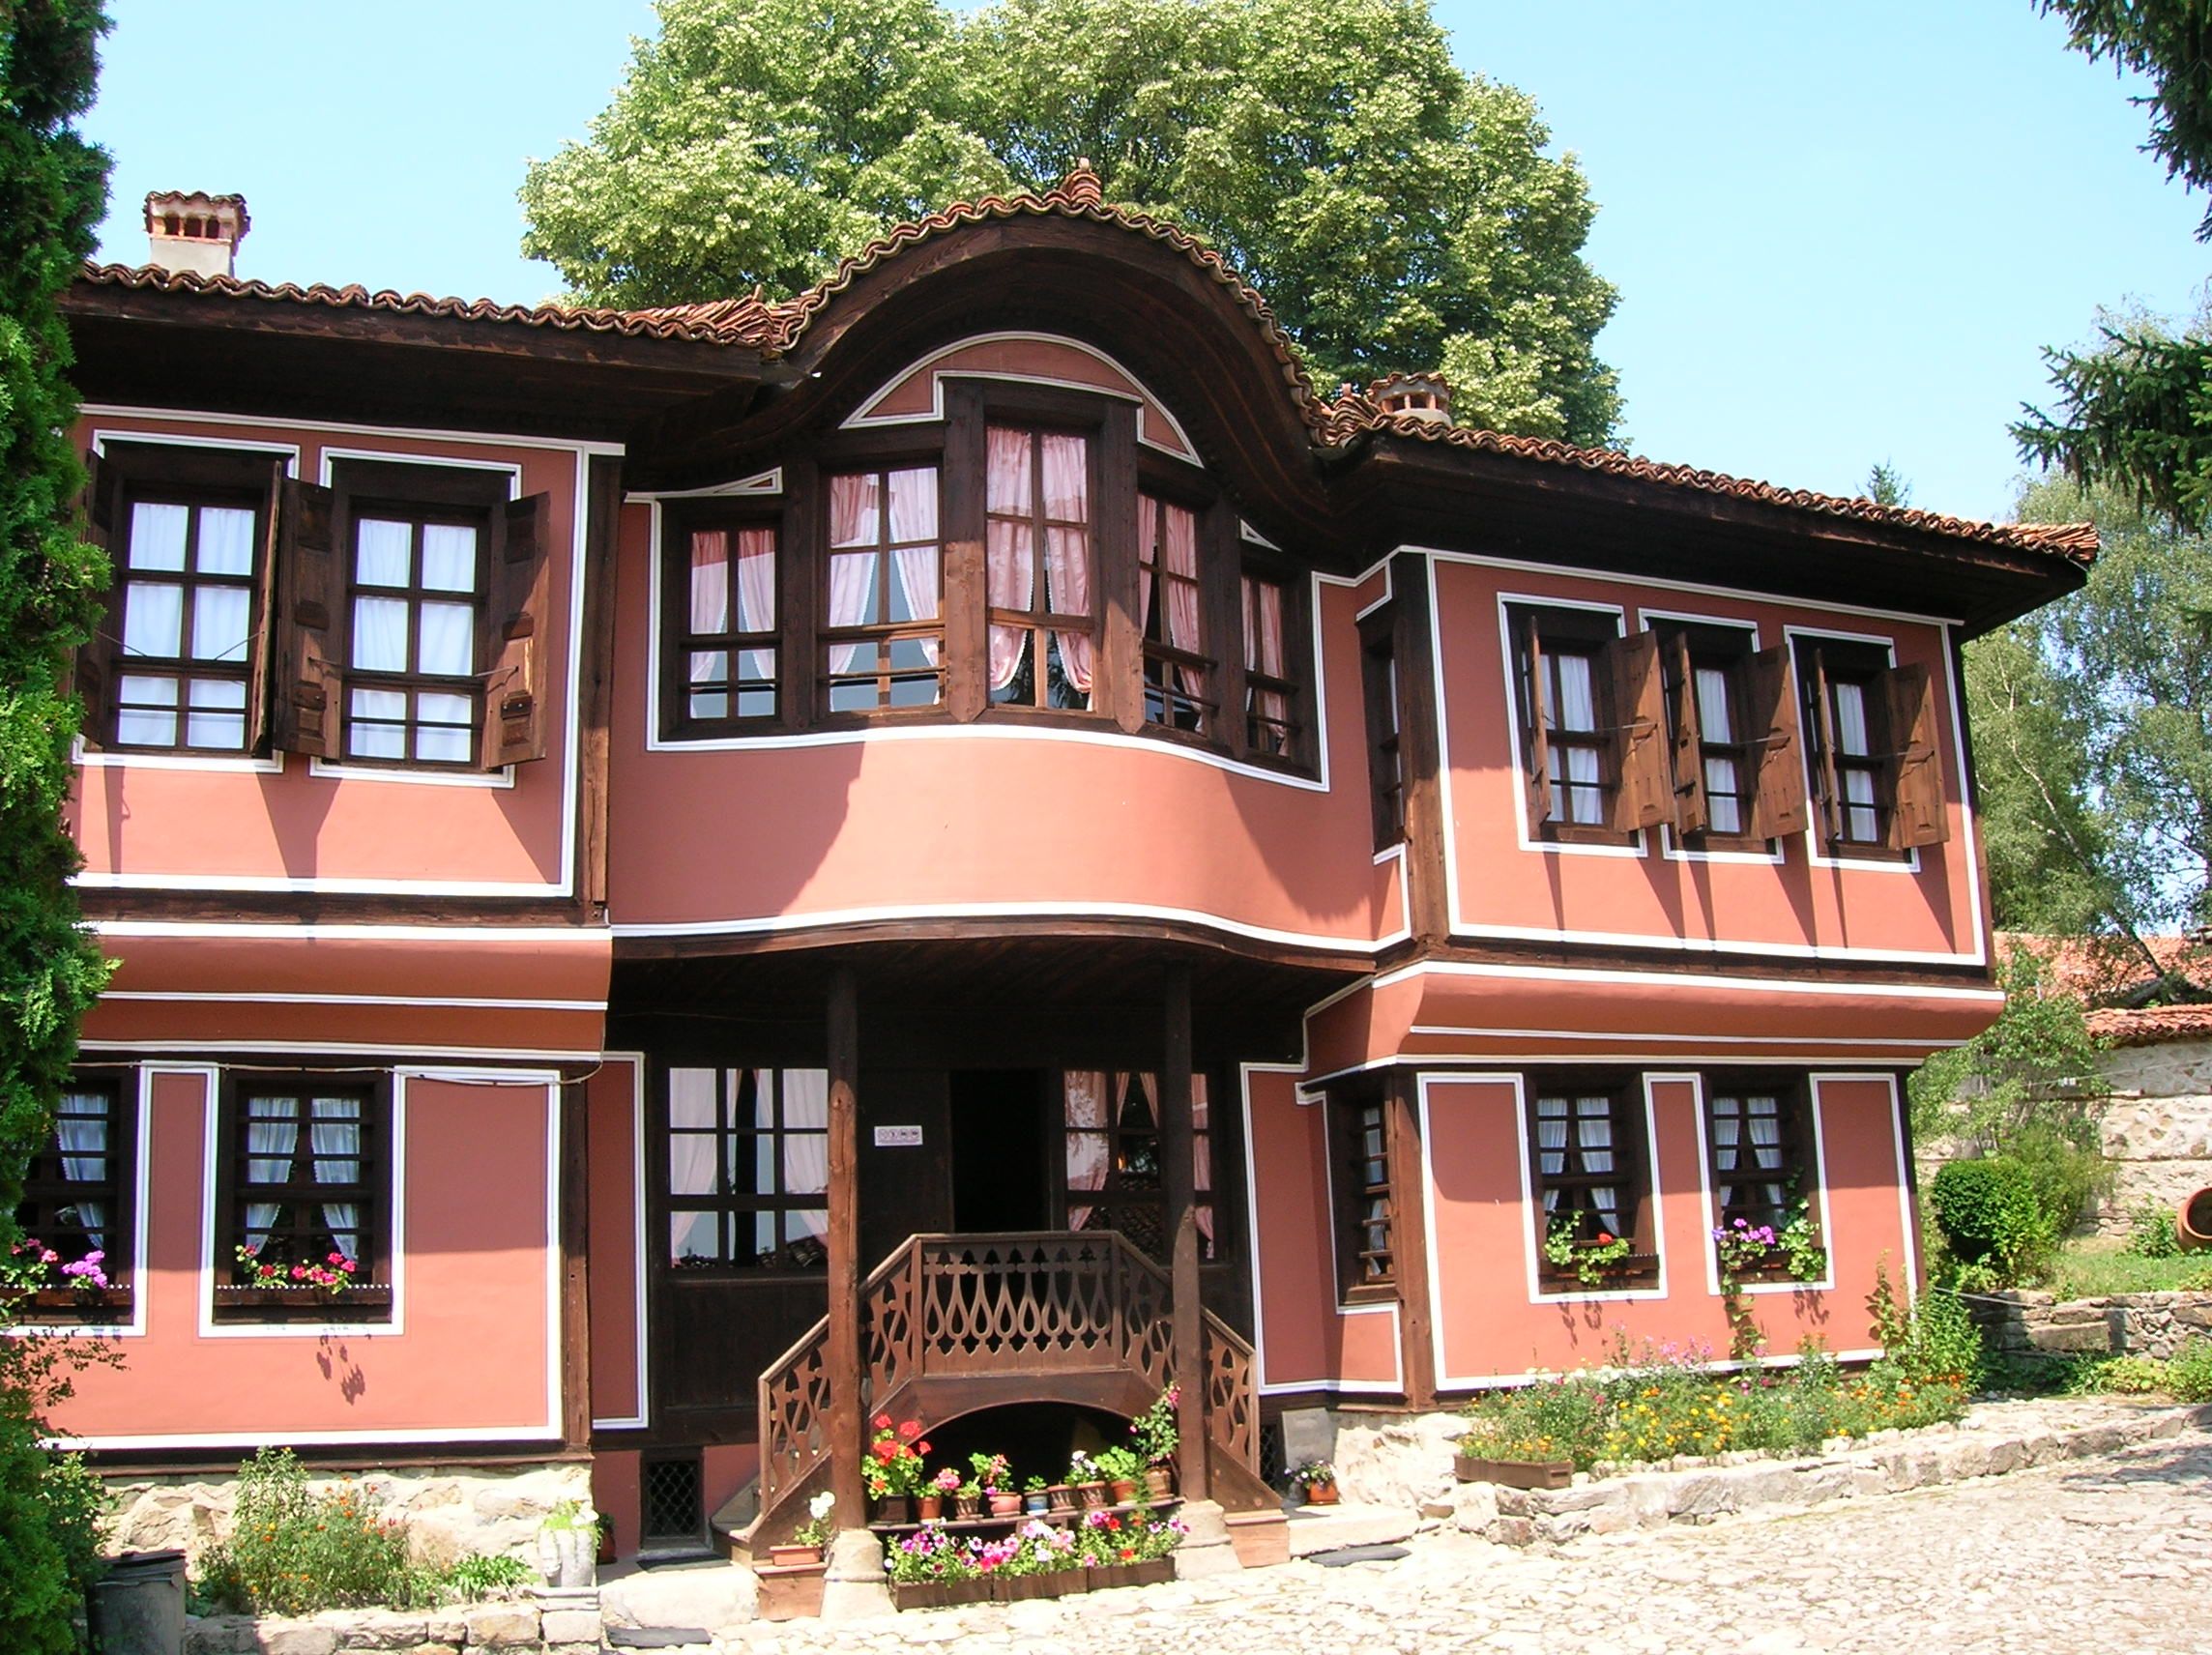 Kableshkov House, in Koprivshtitsa -Author TwoWings